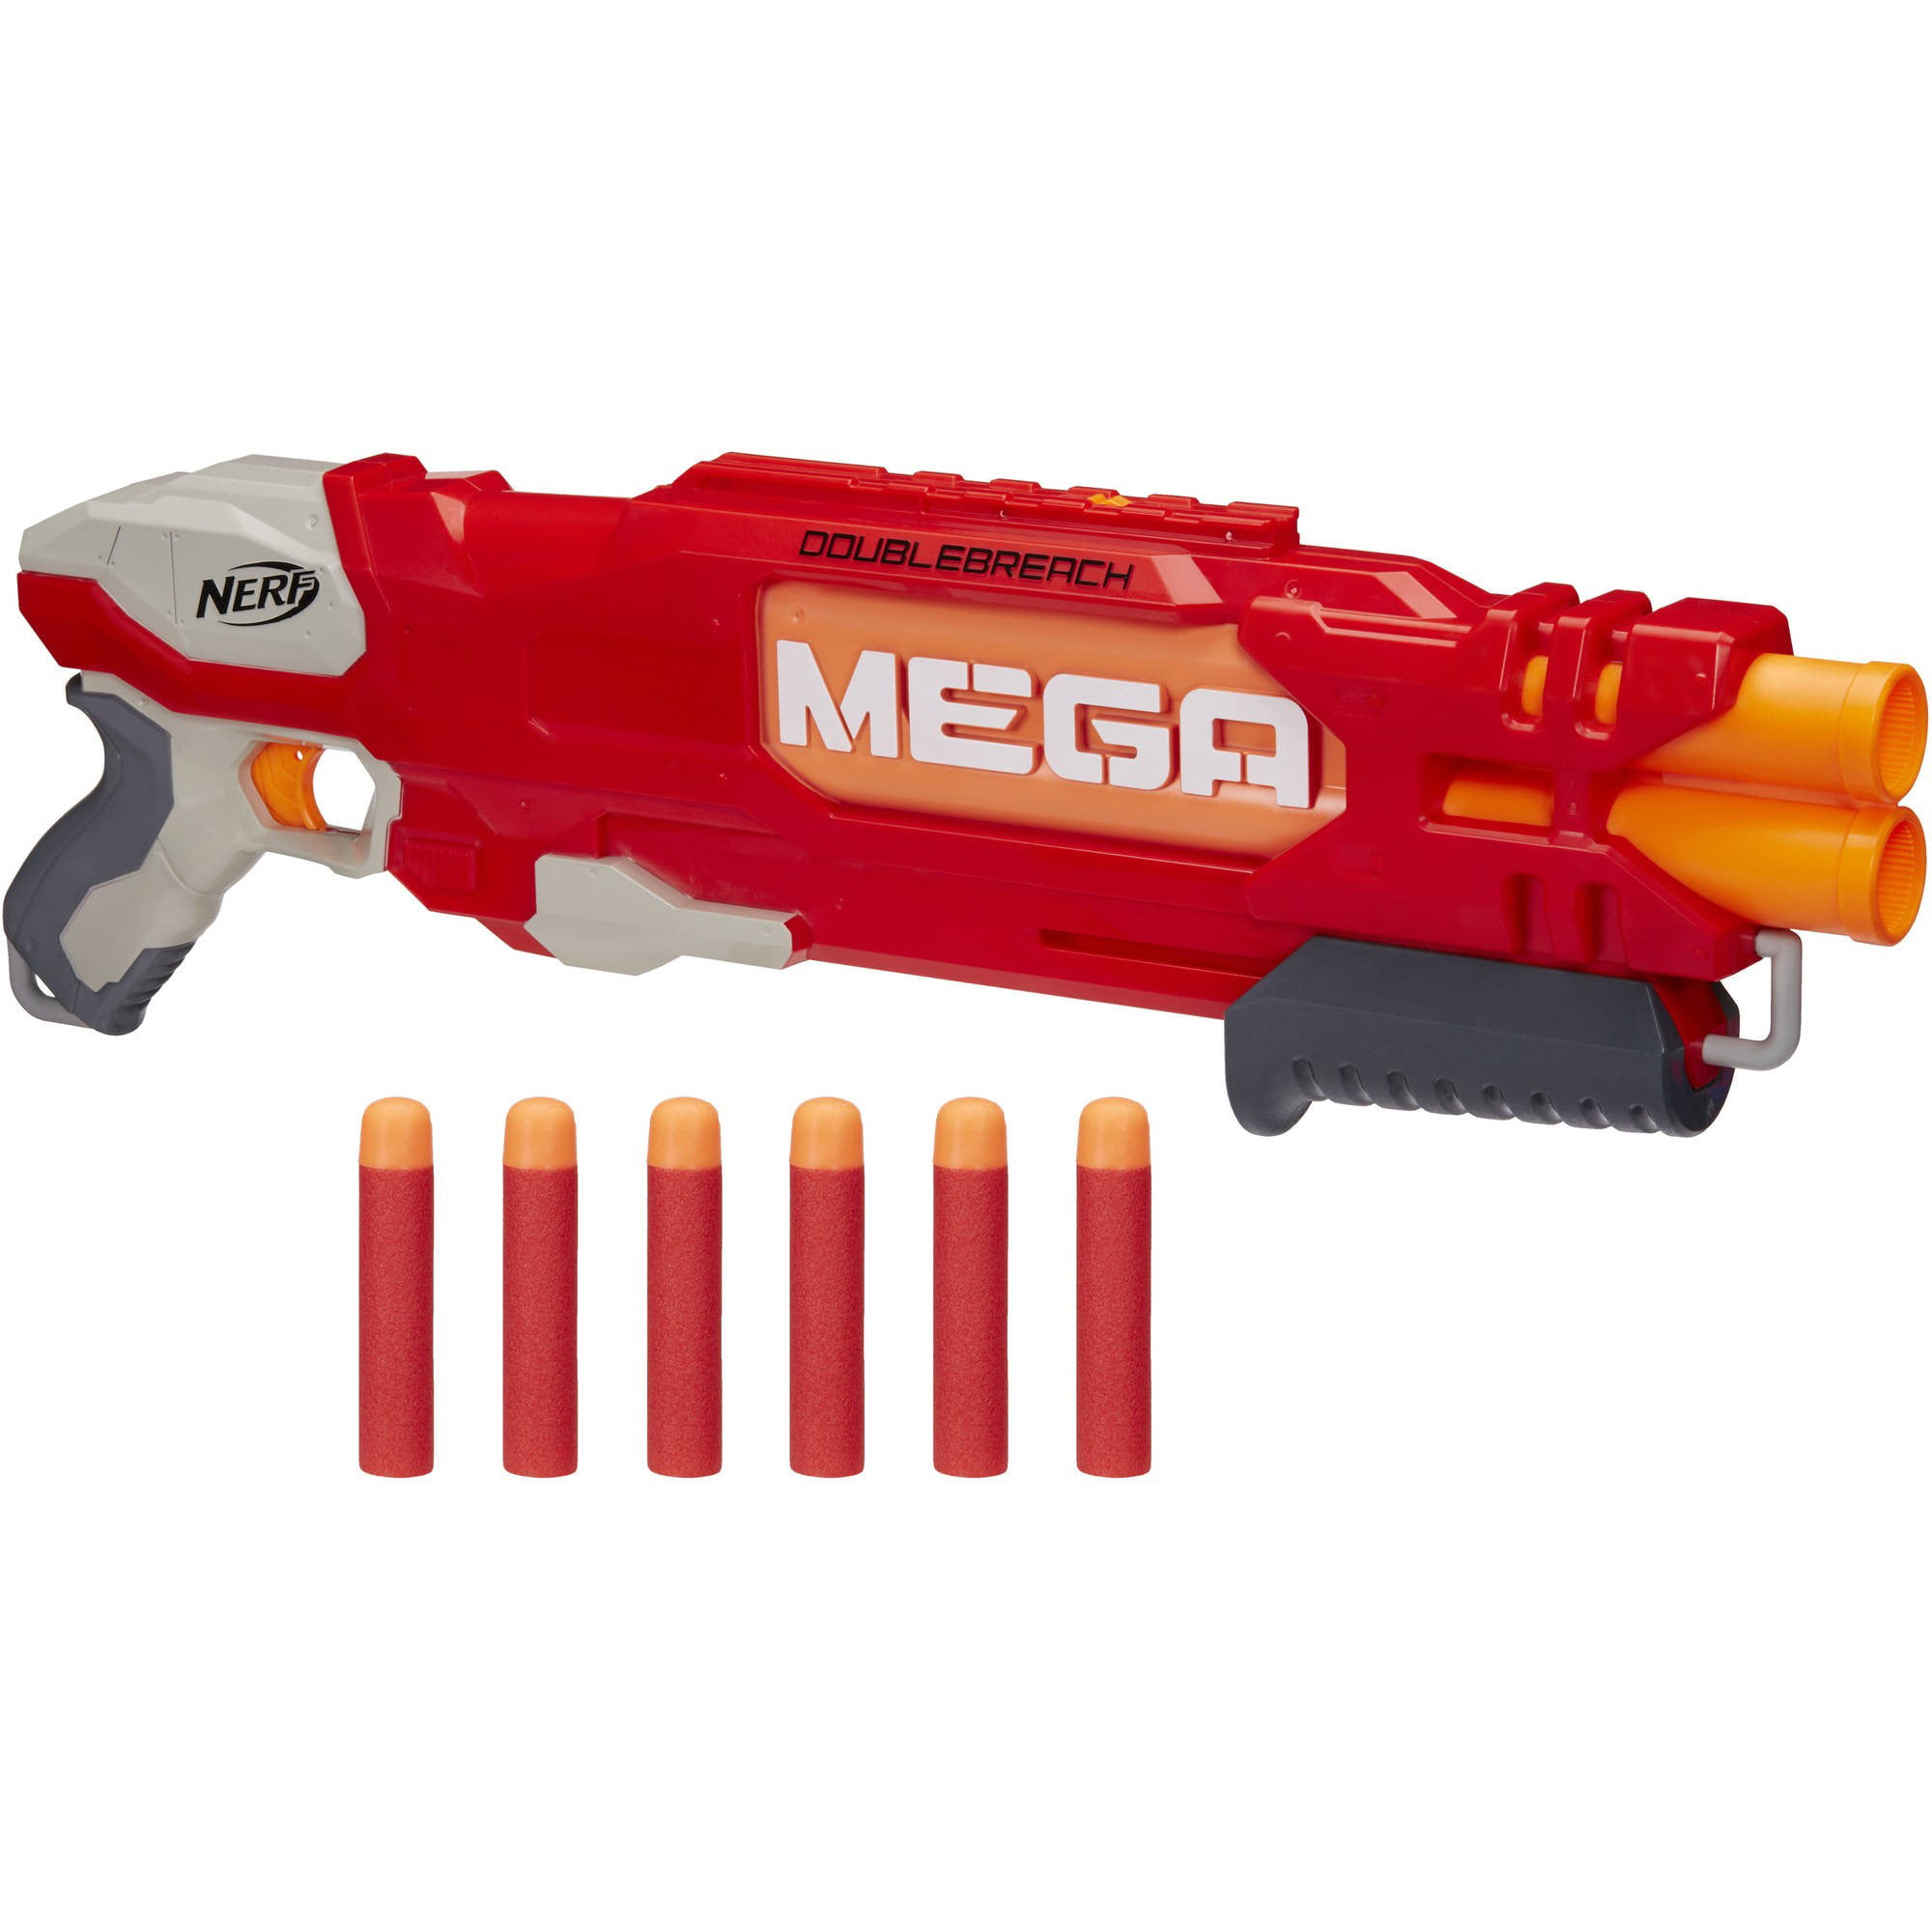 Nerf N-strike Mega Doublebreach Blaster - Walmart.com